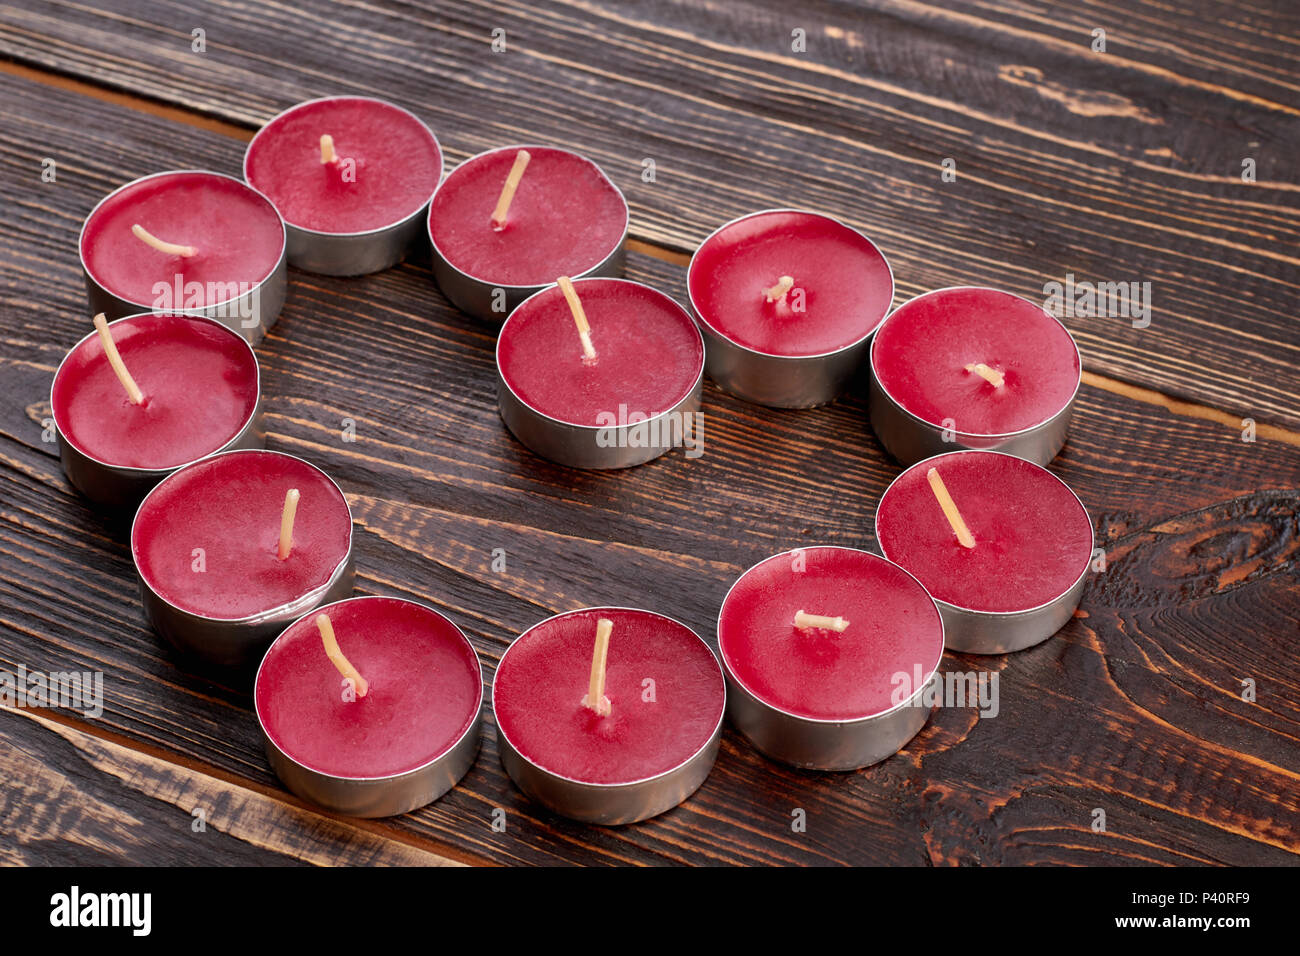 Red Heart Shaped Tea Light Candles